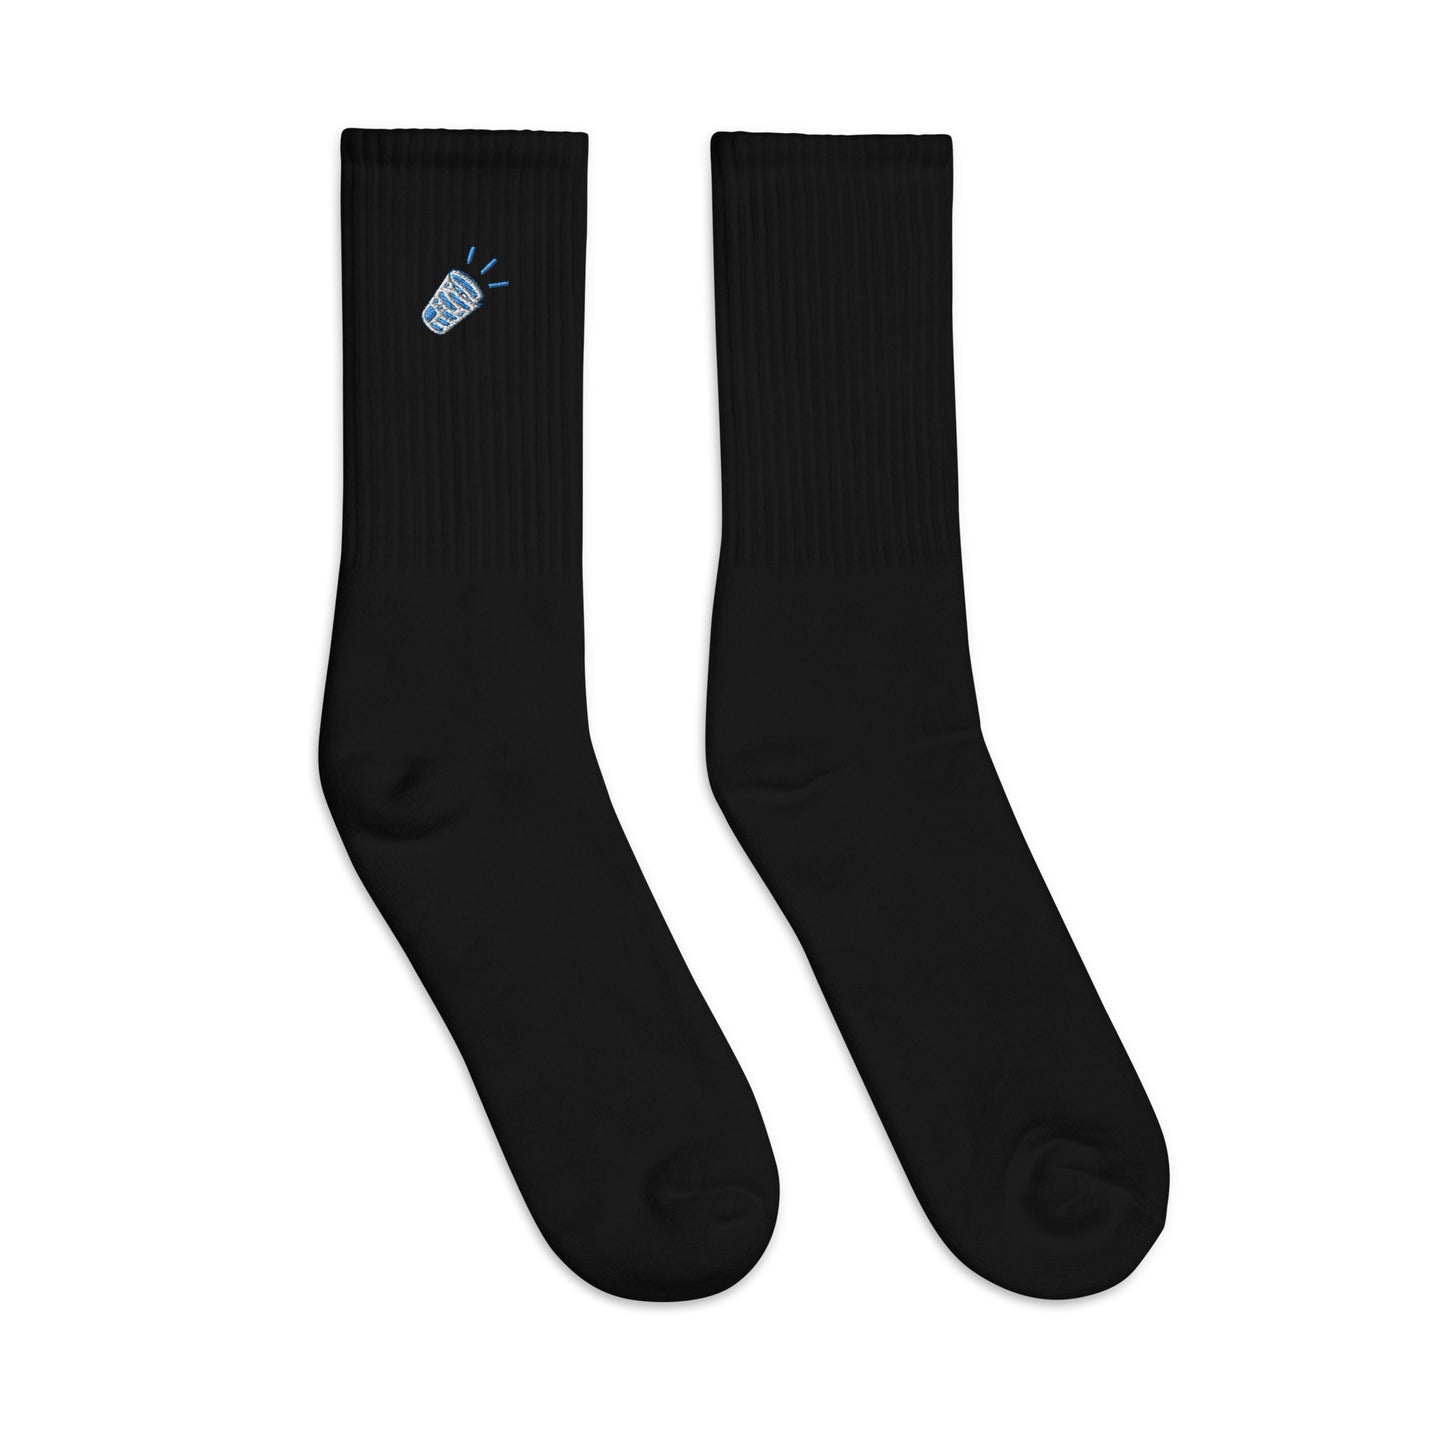 MB Logo Embroidered socks